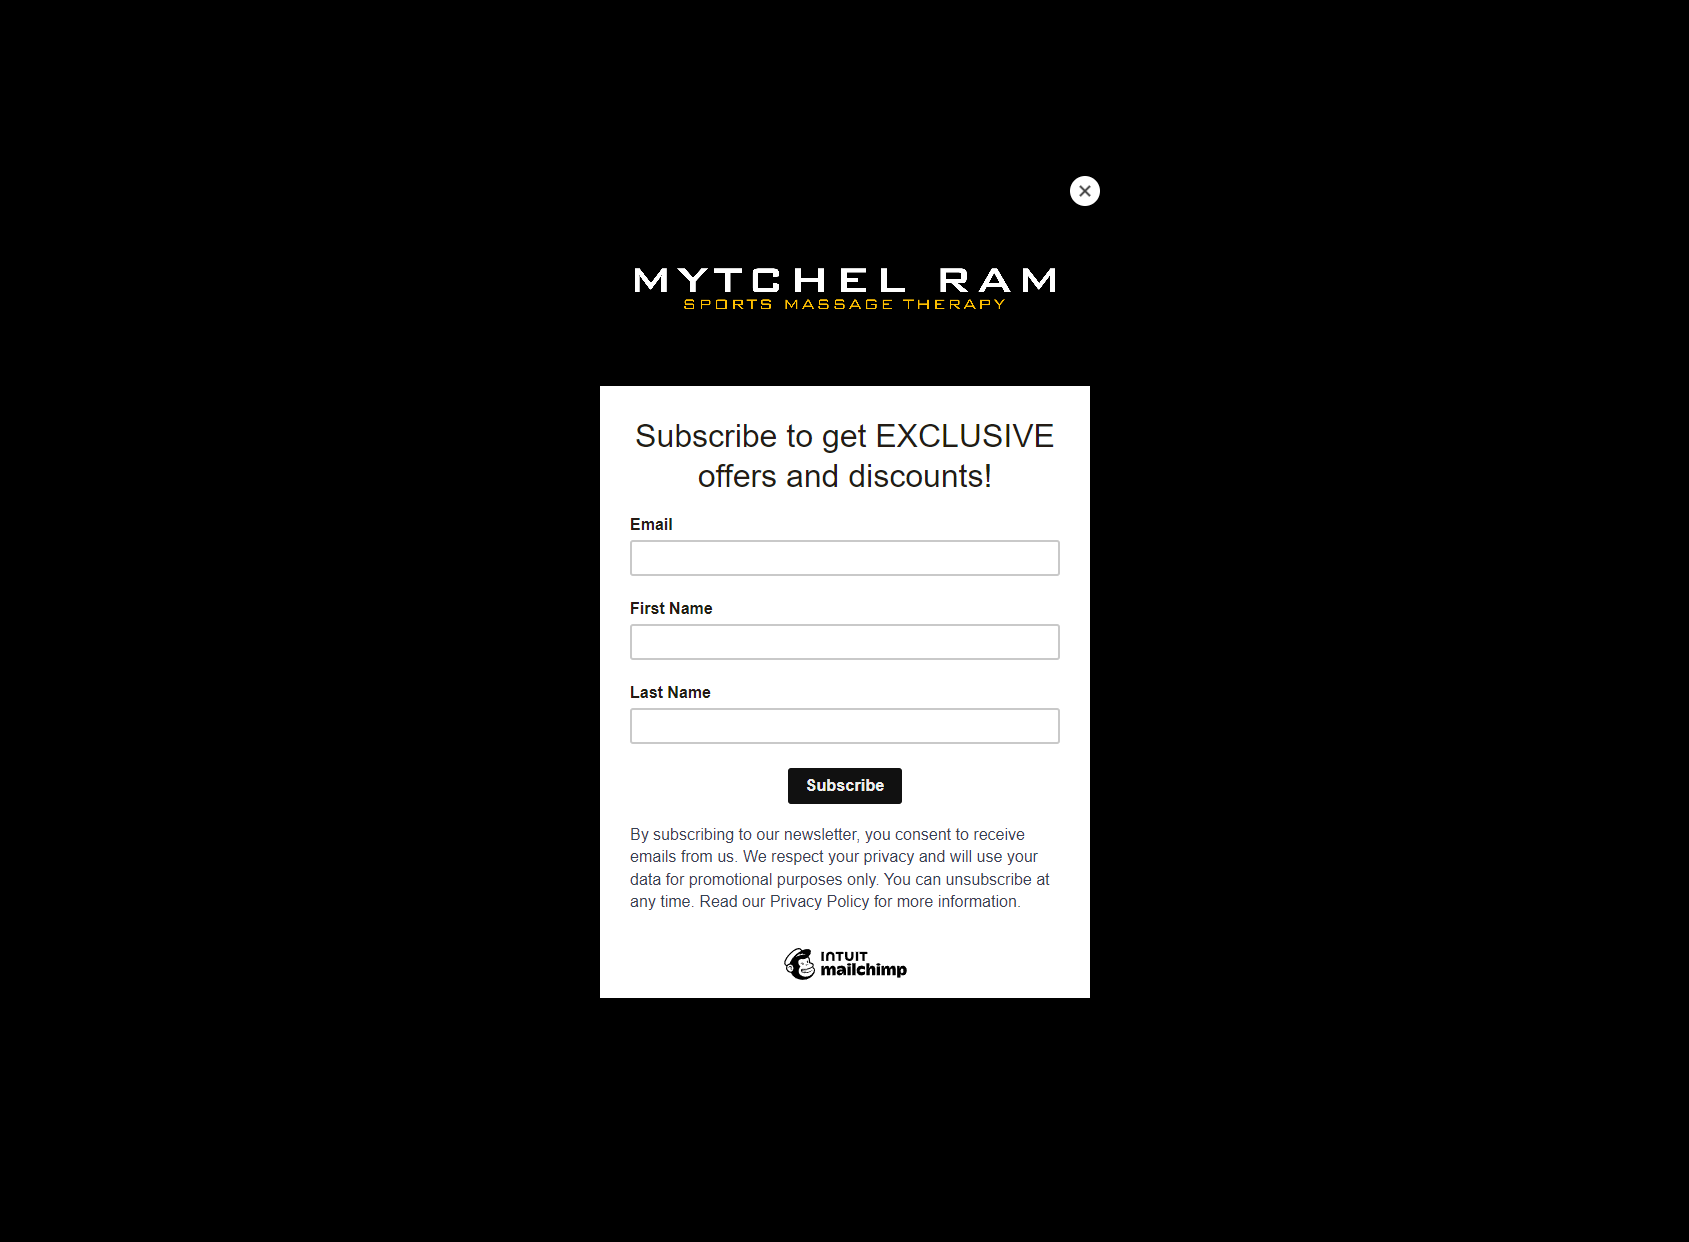 Mytchel Ram Sports Massage Therapy